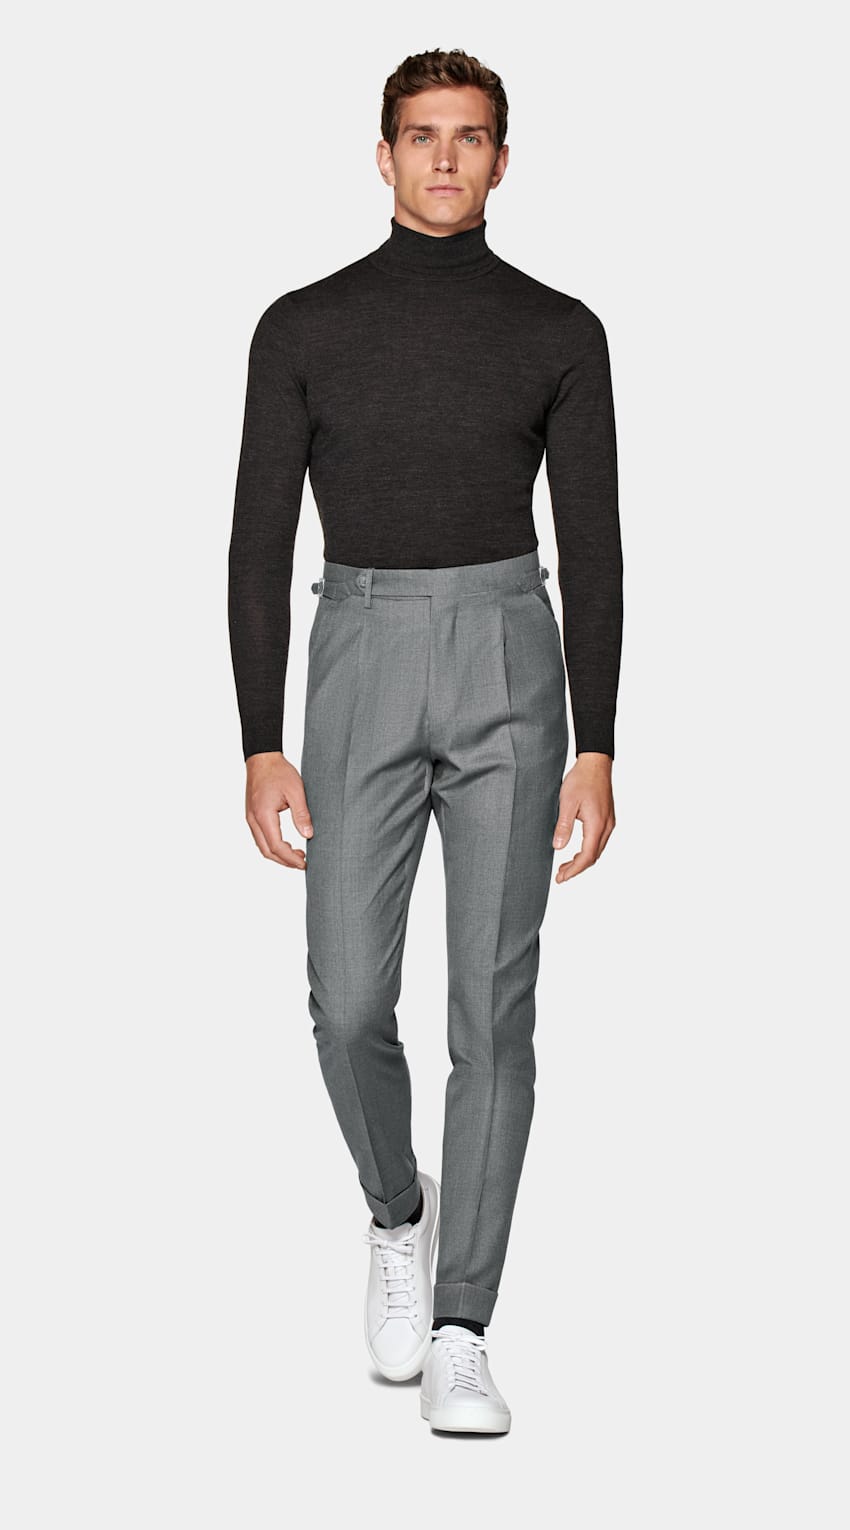 Dark Grey Turtleneck | Pure Merino Wool | Suitsupply Online Store